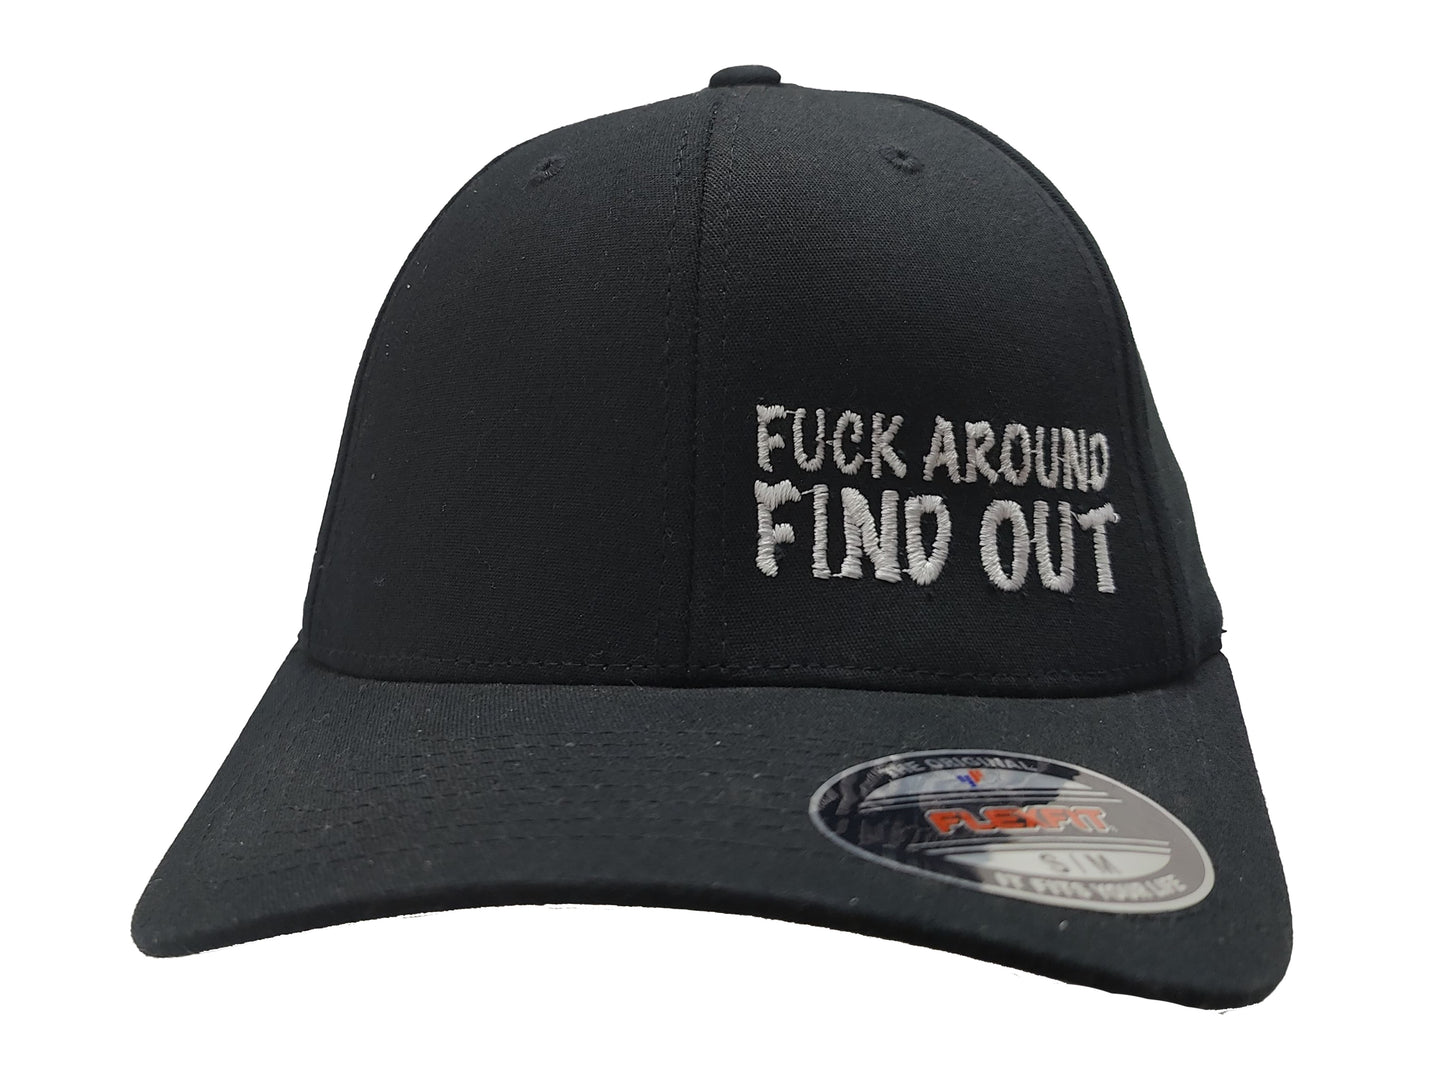 FUCK AROUND FIND OUT FlexFit Adult Hat Black / White